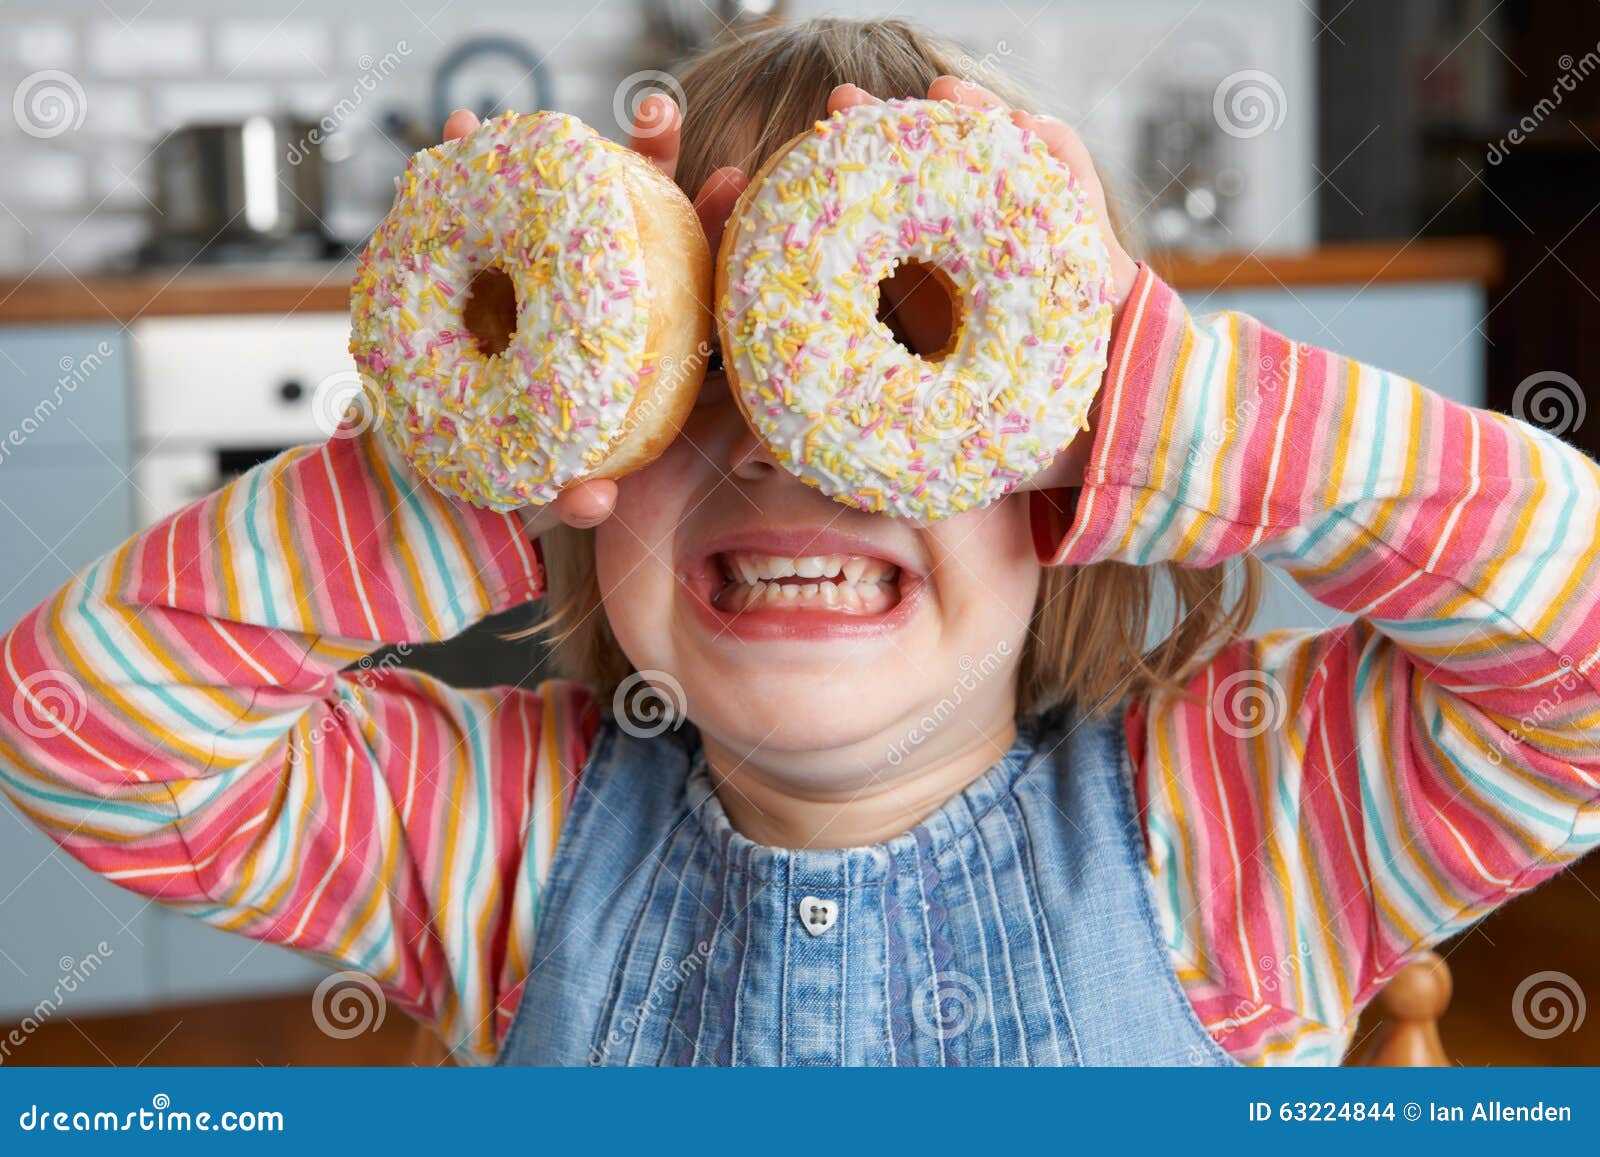 girl making glasses using sugary doughnuts